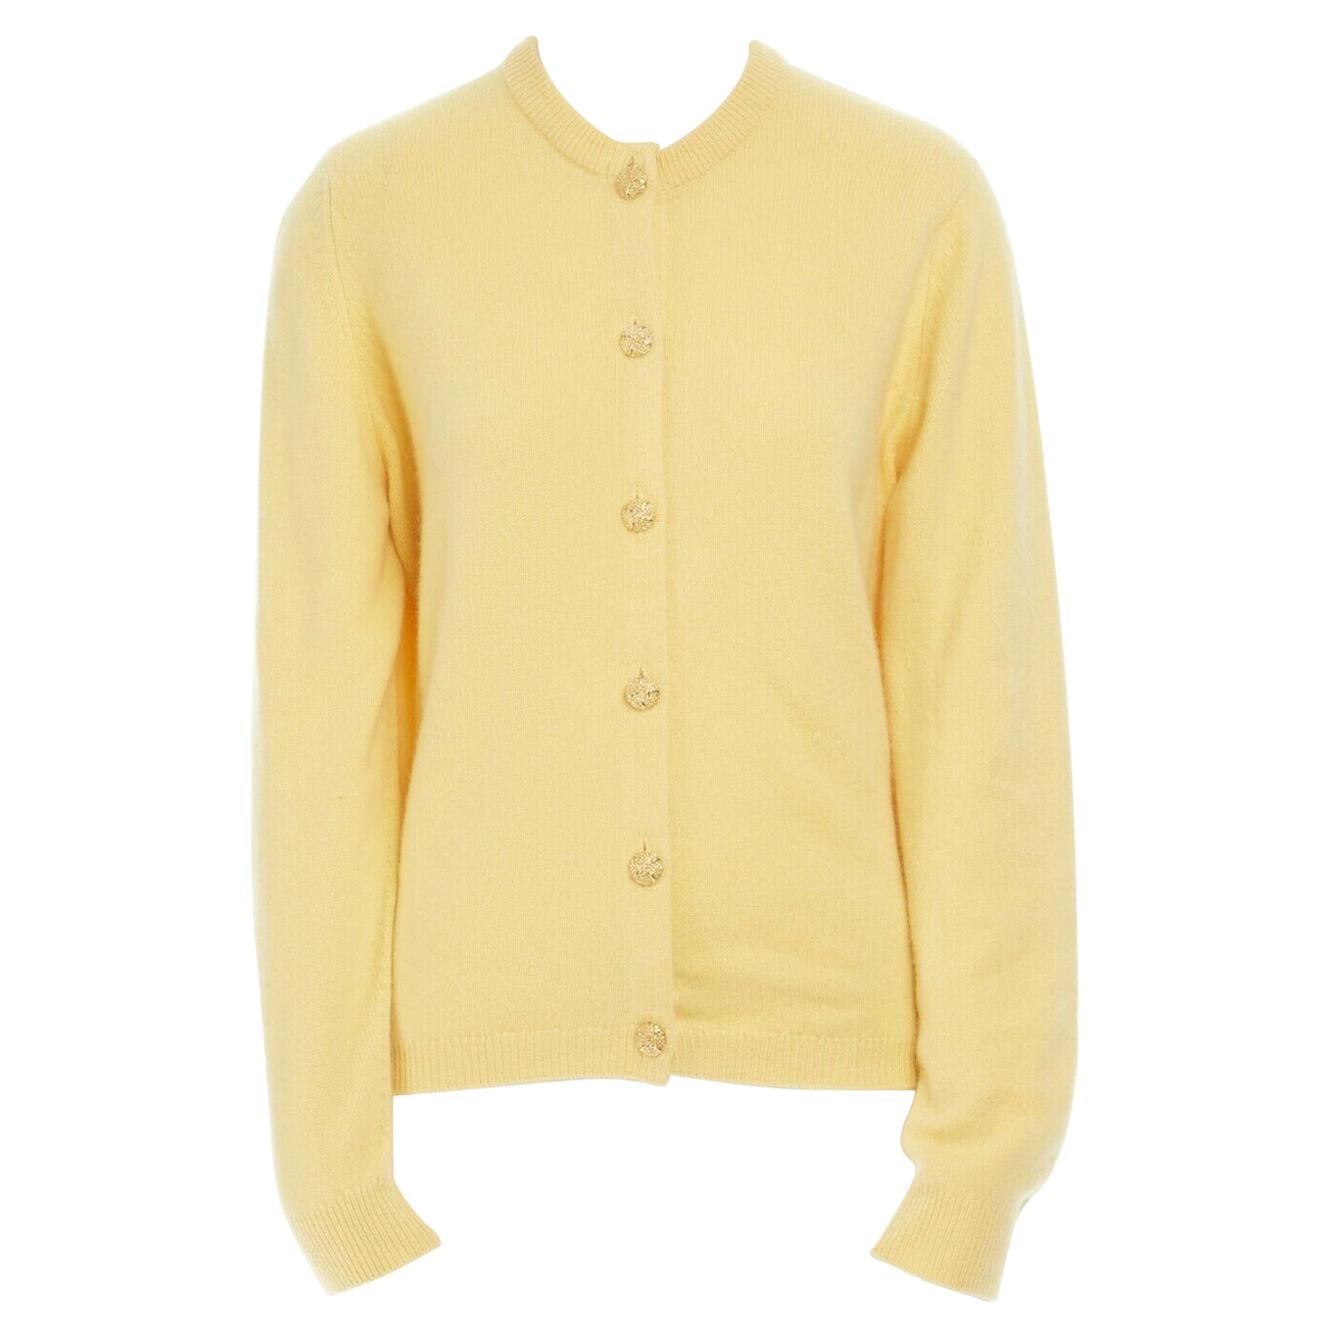 BALLANTYNE 100% pure cashmere yellow gold-tone button cardigan sweater ...